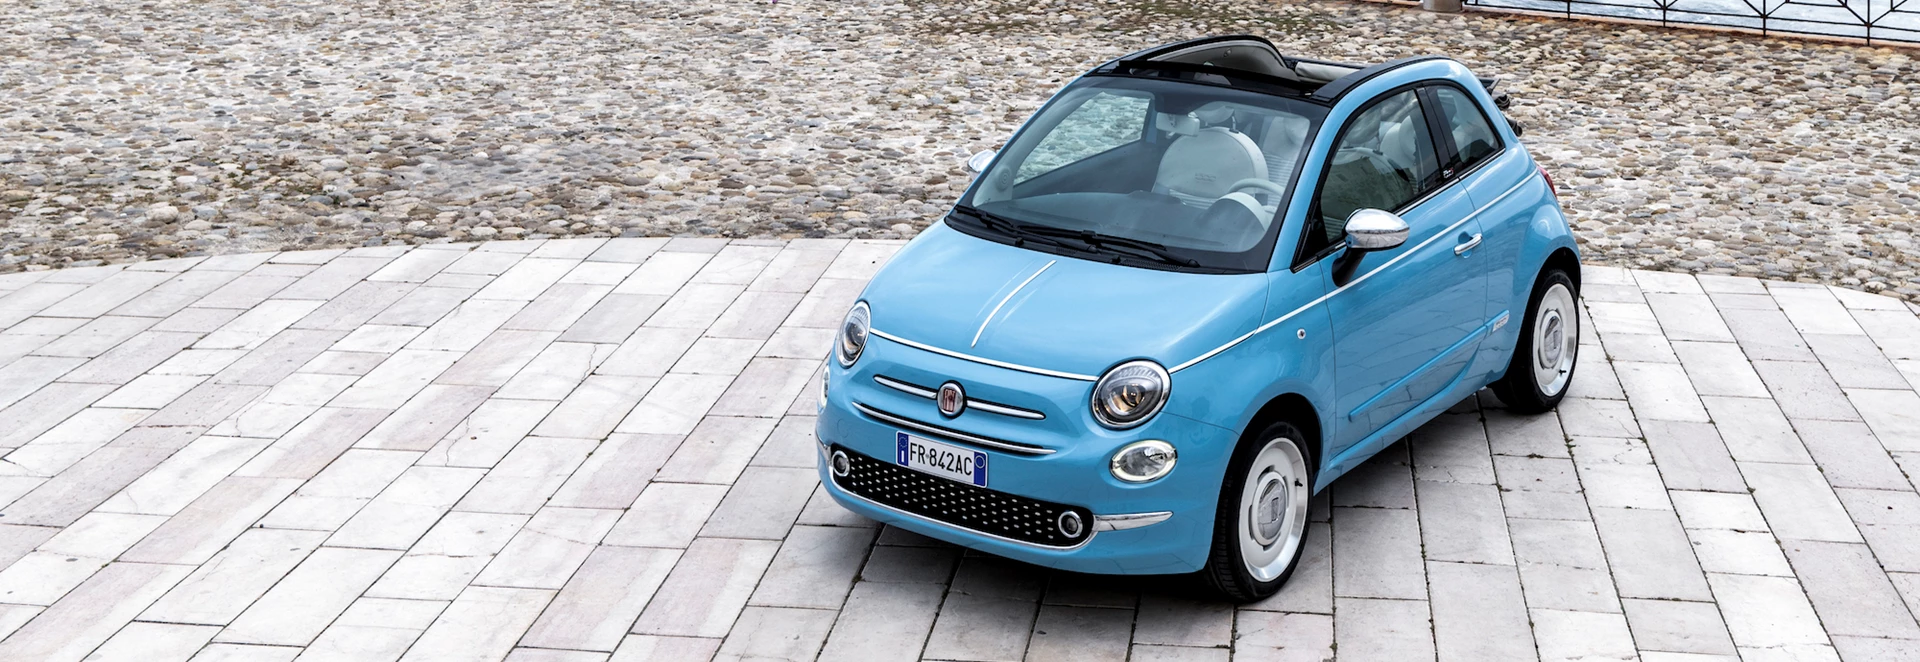 Fiat releases Spiaggina ‘58 special series anniversary model